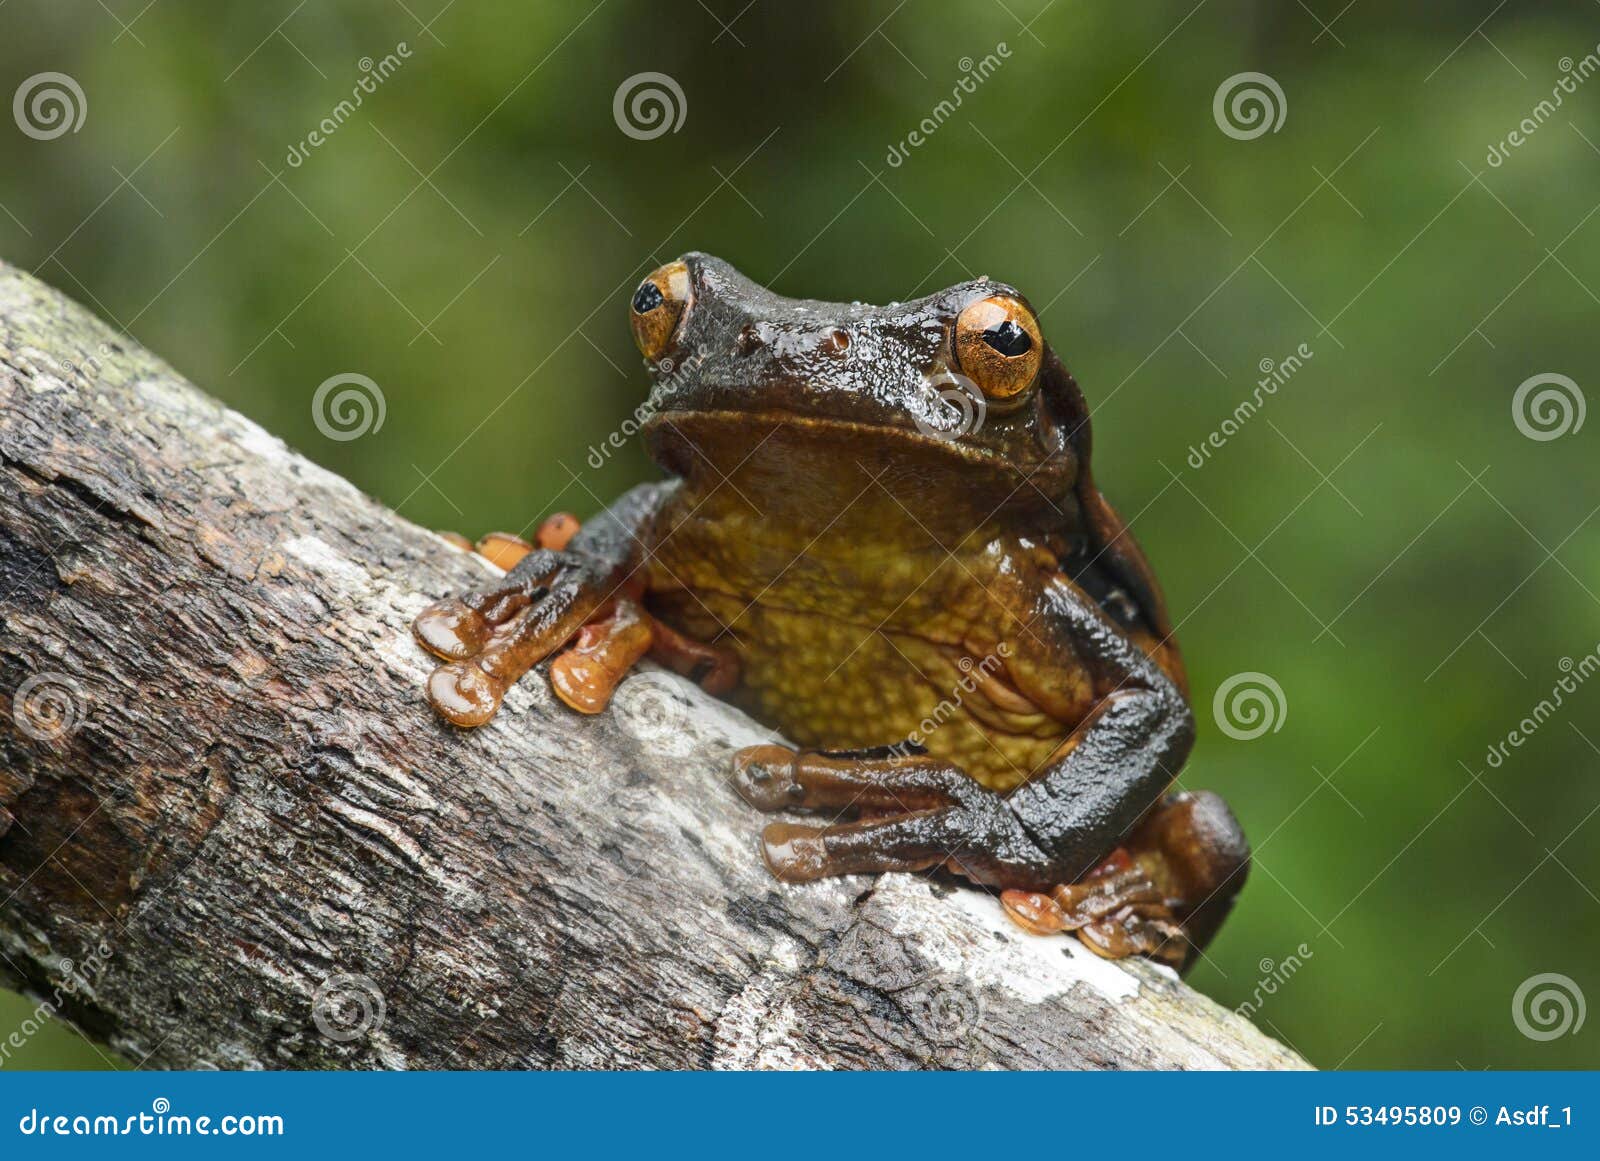 surinam golden-eyed tree frog